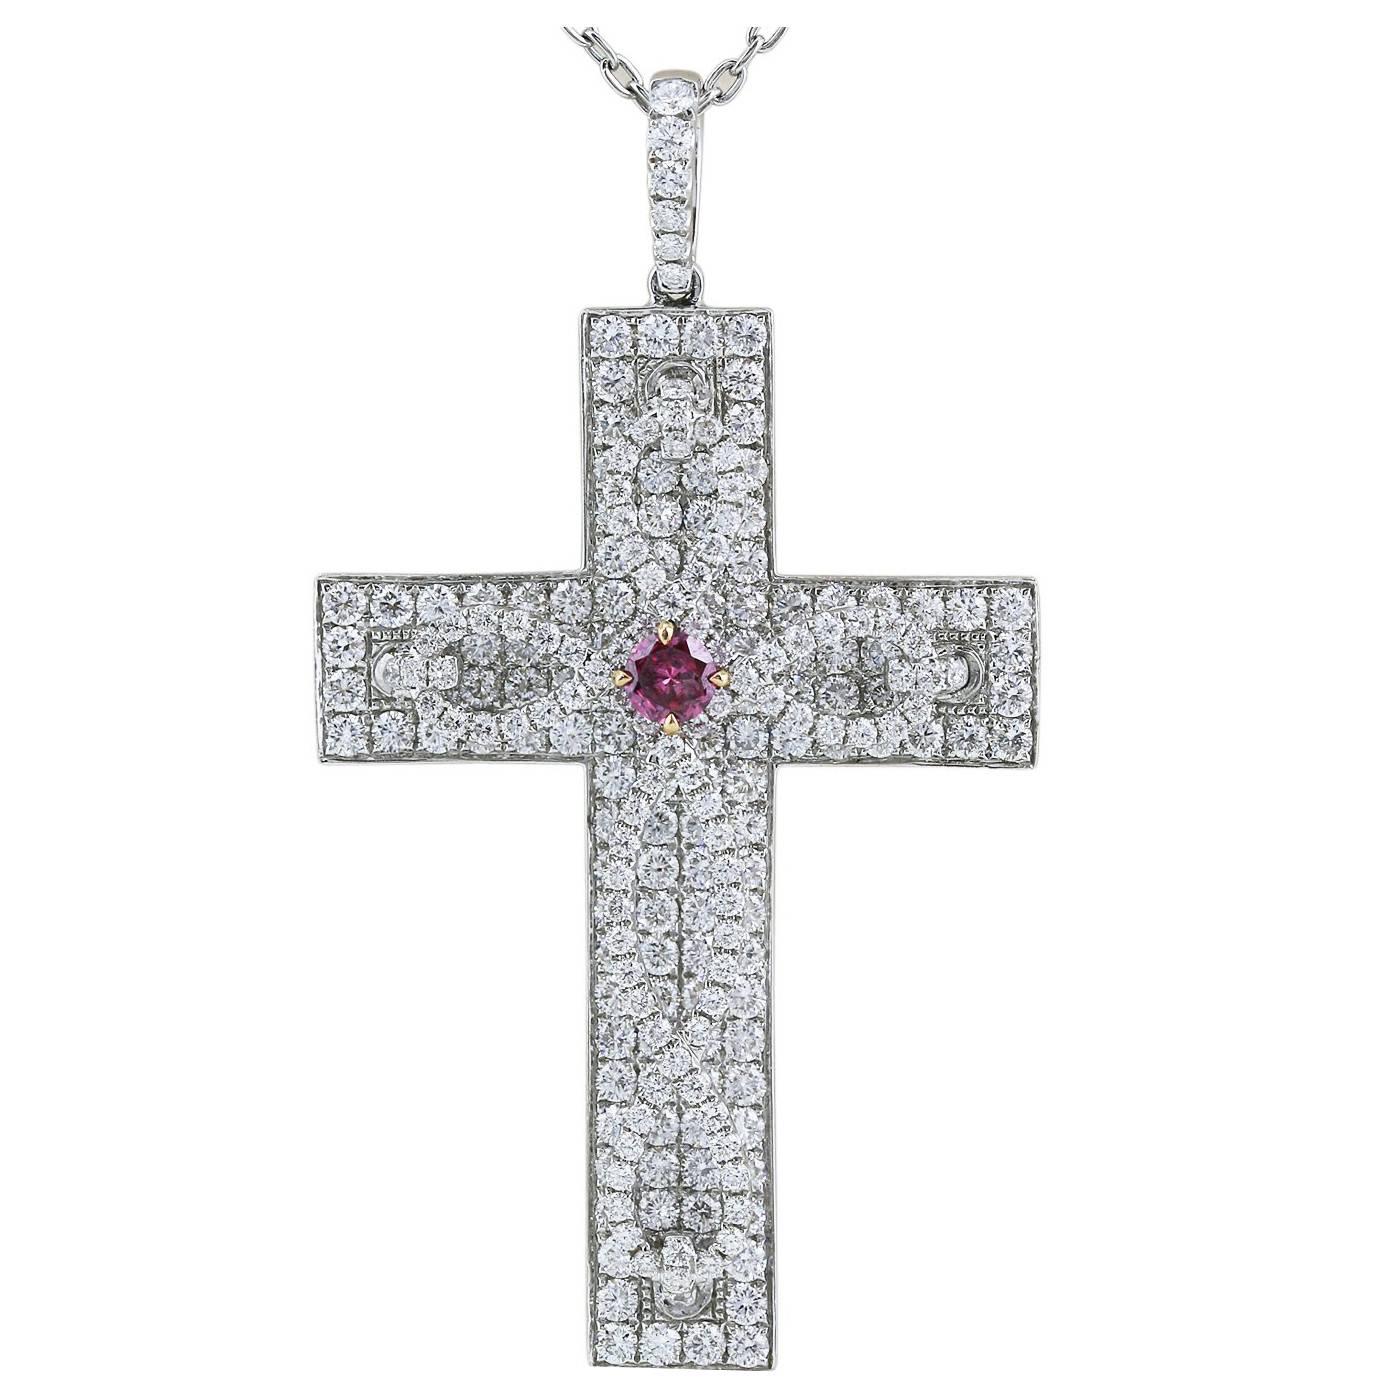 3.77 Carat Diamond Pave Cross Pendant with Vivid Argyle Pink Centre Diamond For Sale